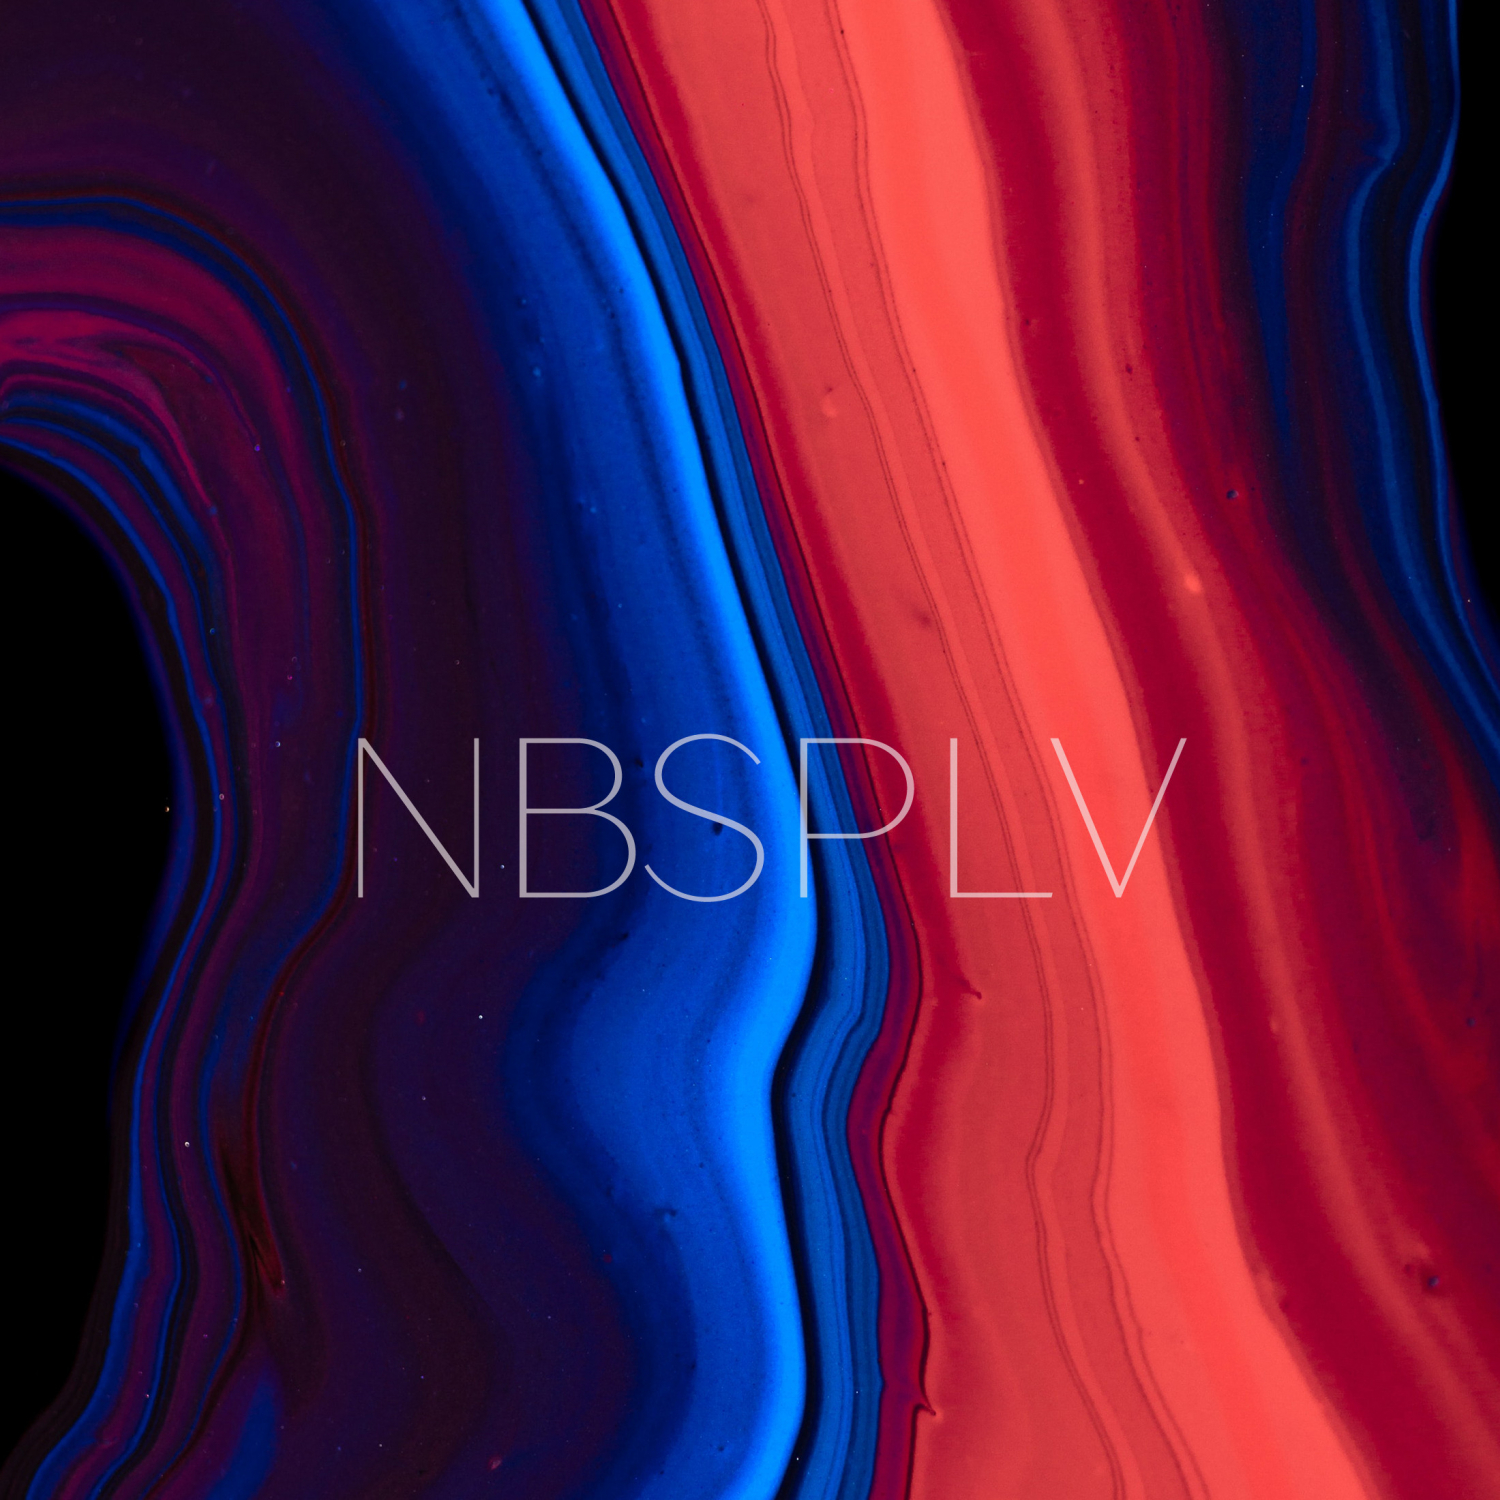 Cold waves. NBSPLV myriad Wave. NBSPLV обложки альбомов. Артист NBSPLV. NBSPLV Cold Waves.